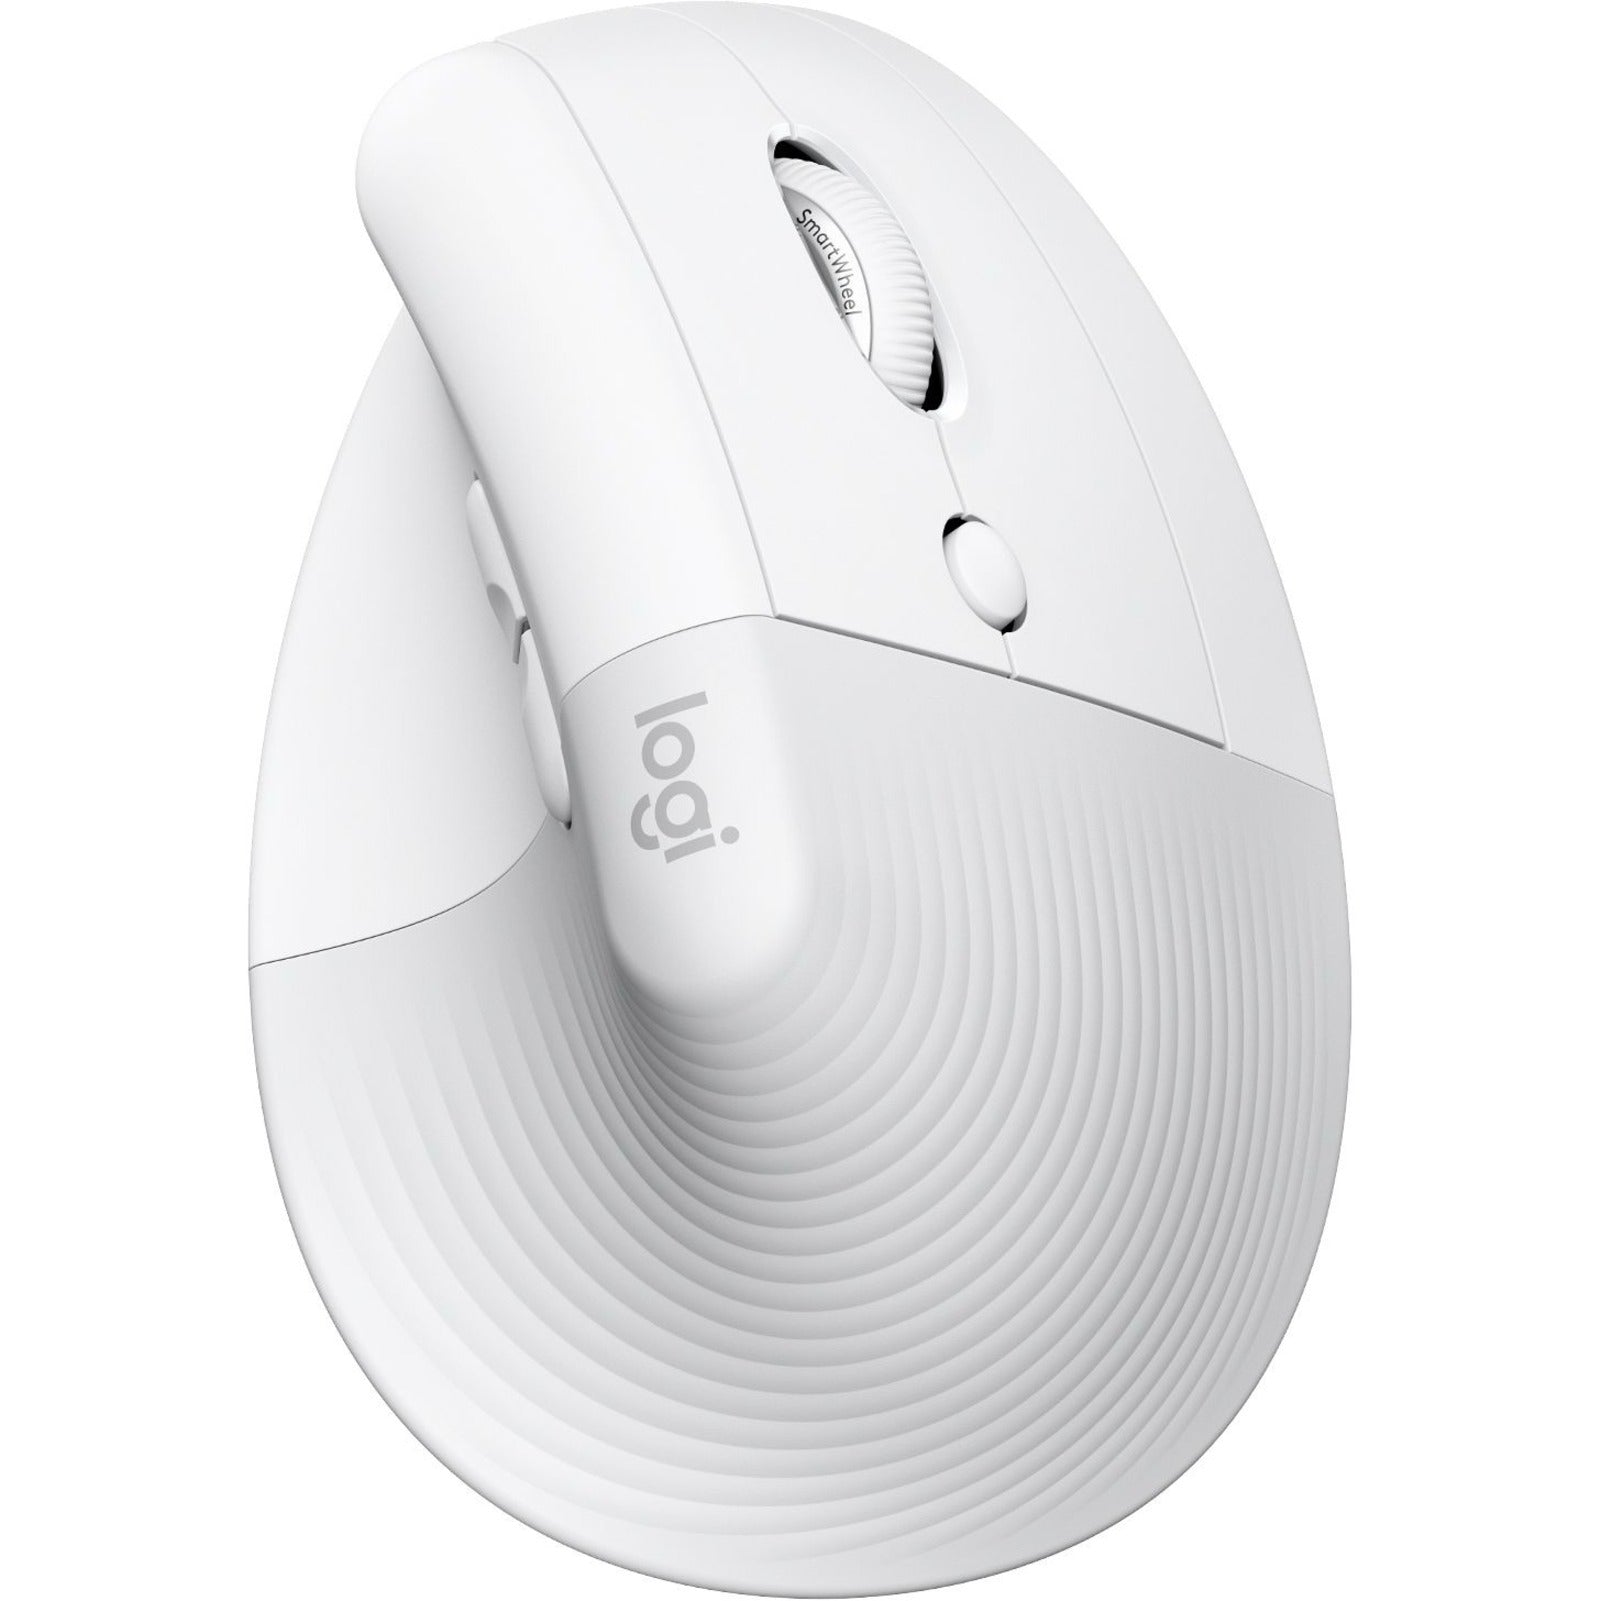 Logitech 910-006471 Lift for Mac (Off-white) Wireless Vertical Ergonomic Mouse, 6 Buttons, 4000 dpi